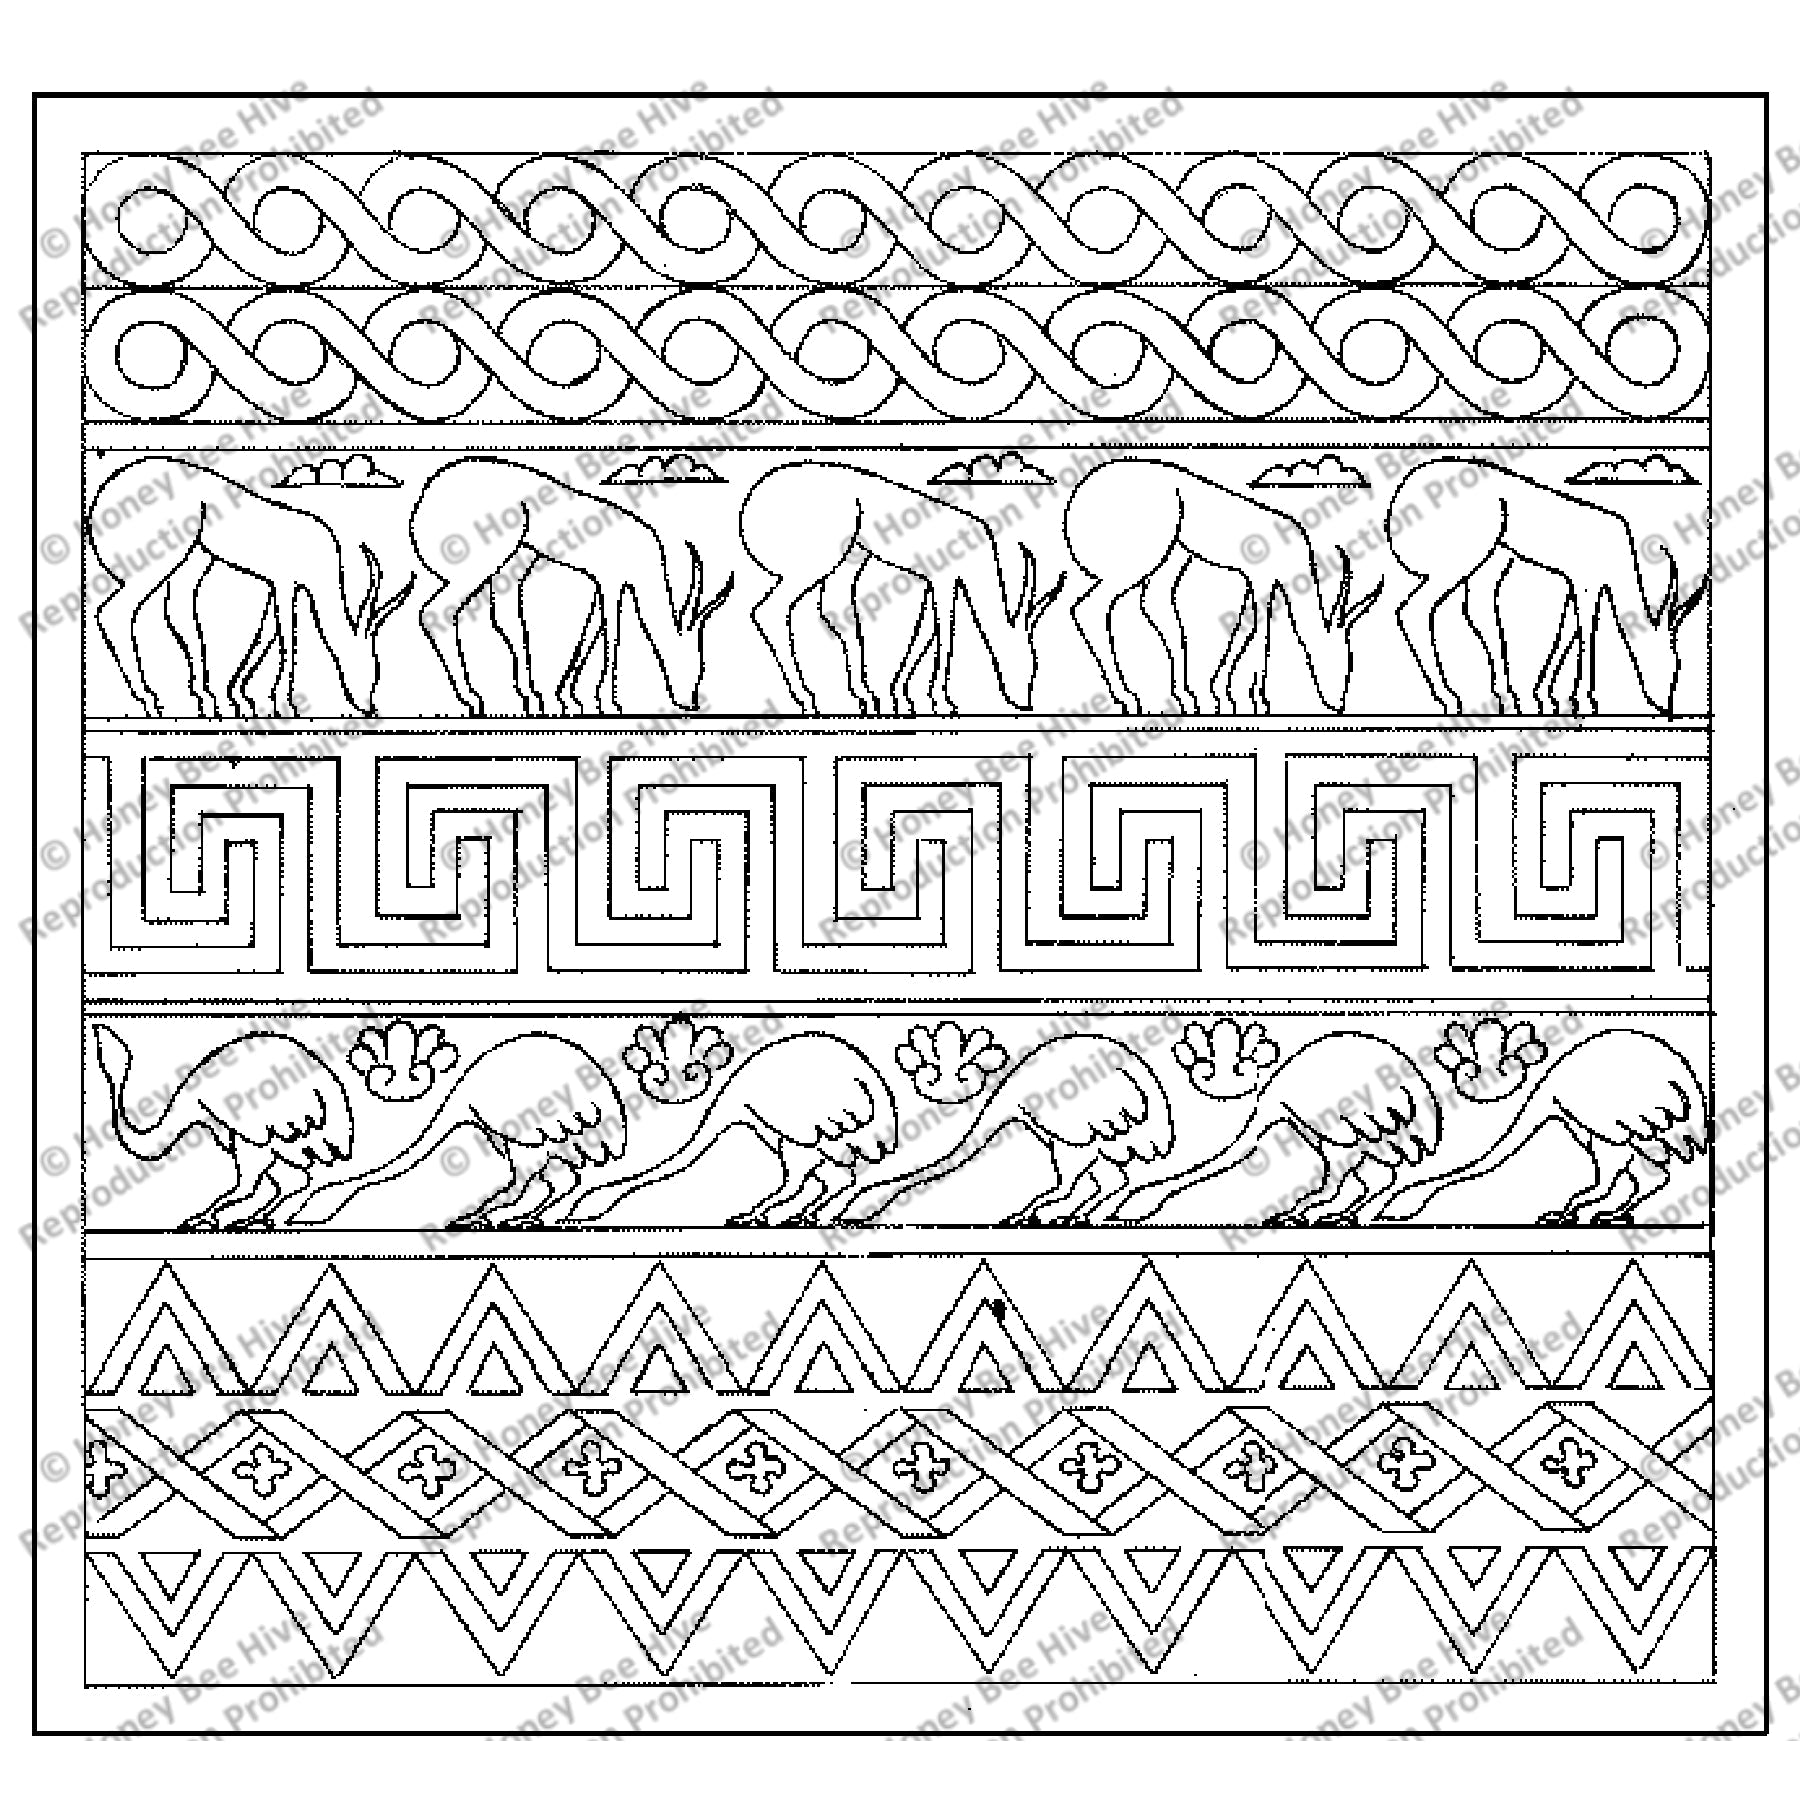 Euclid, rug hooking pattern